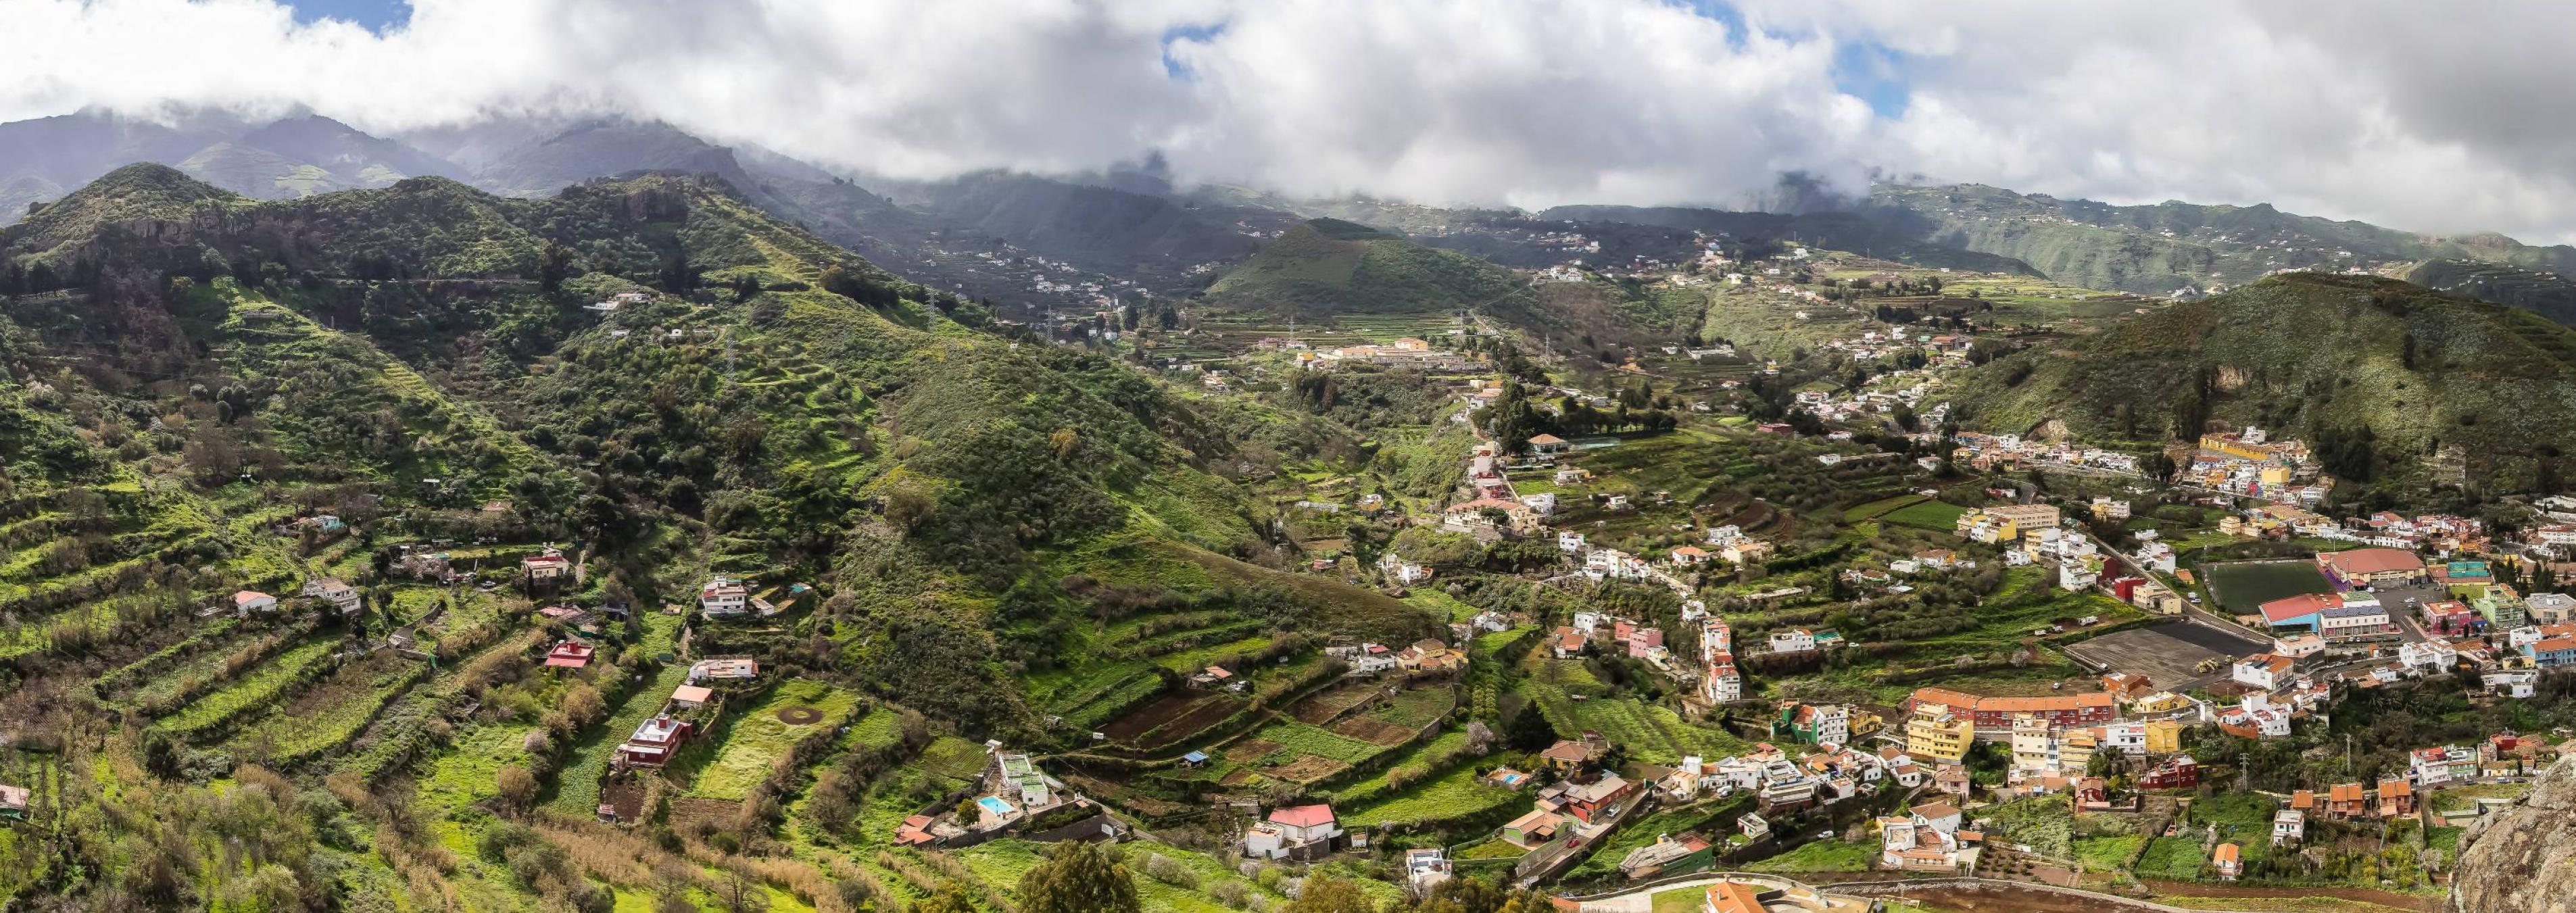 Terraced hillsides surrounding a small community